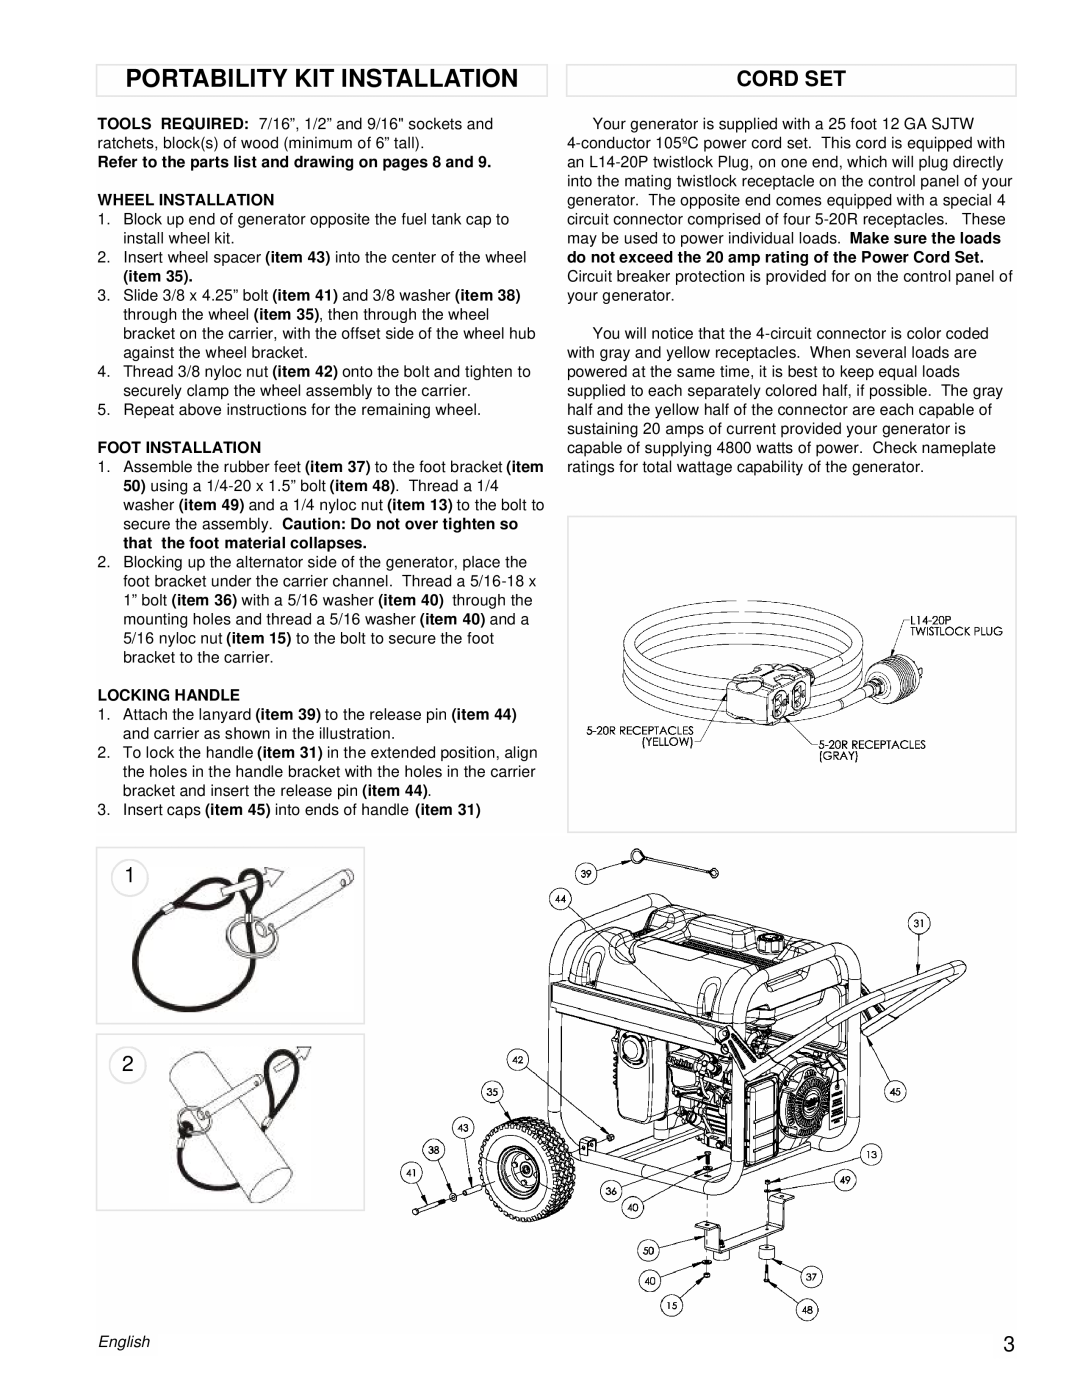 Powermate PM0435001 manual Portability Kit Installation, Cord Set, English 